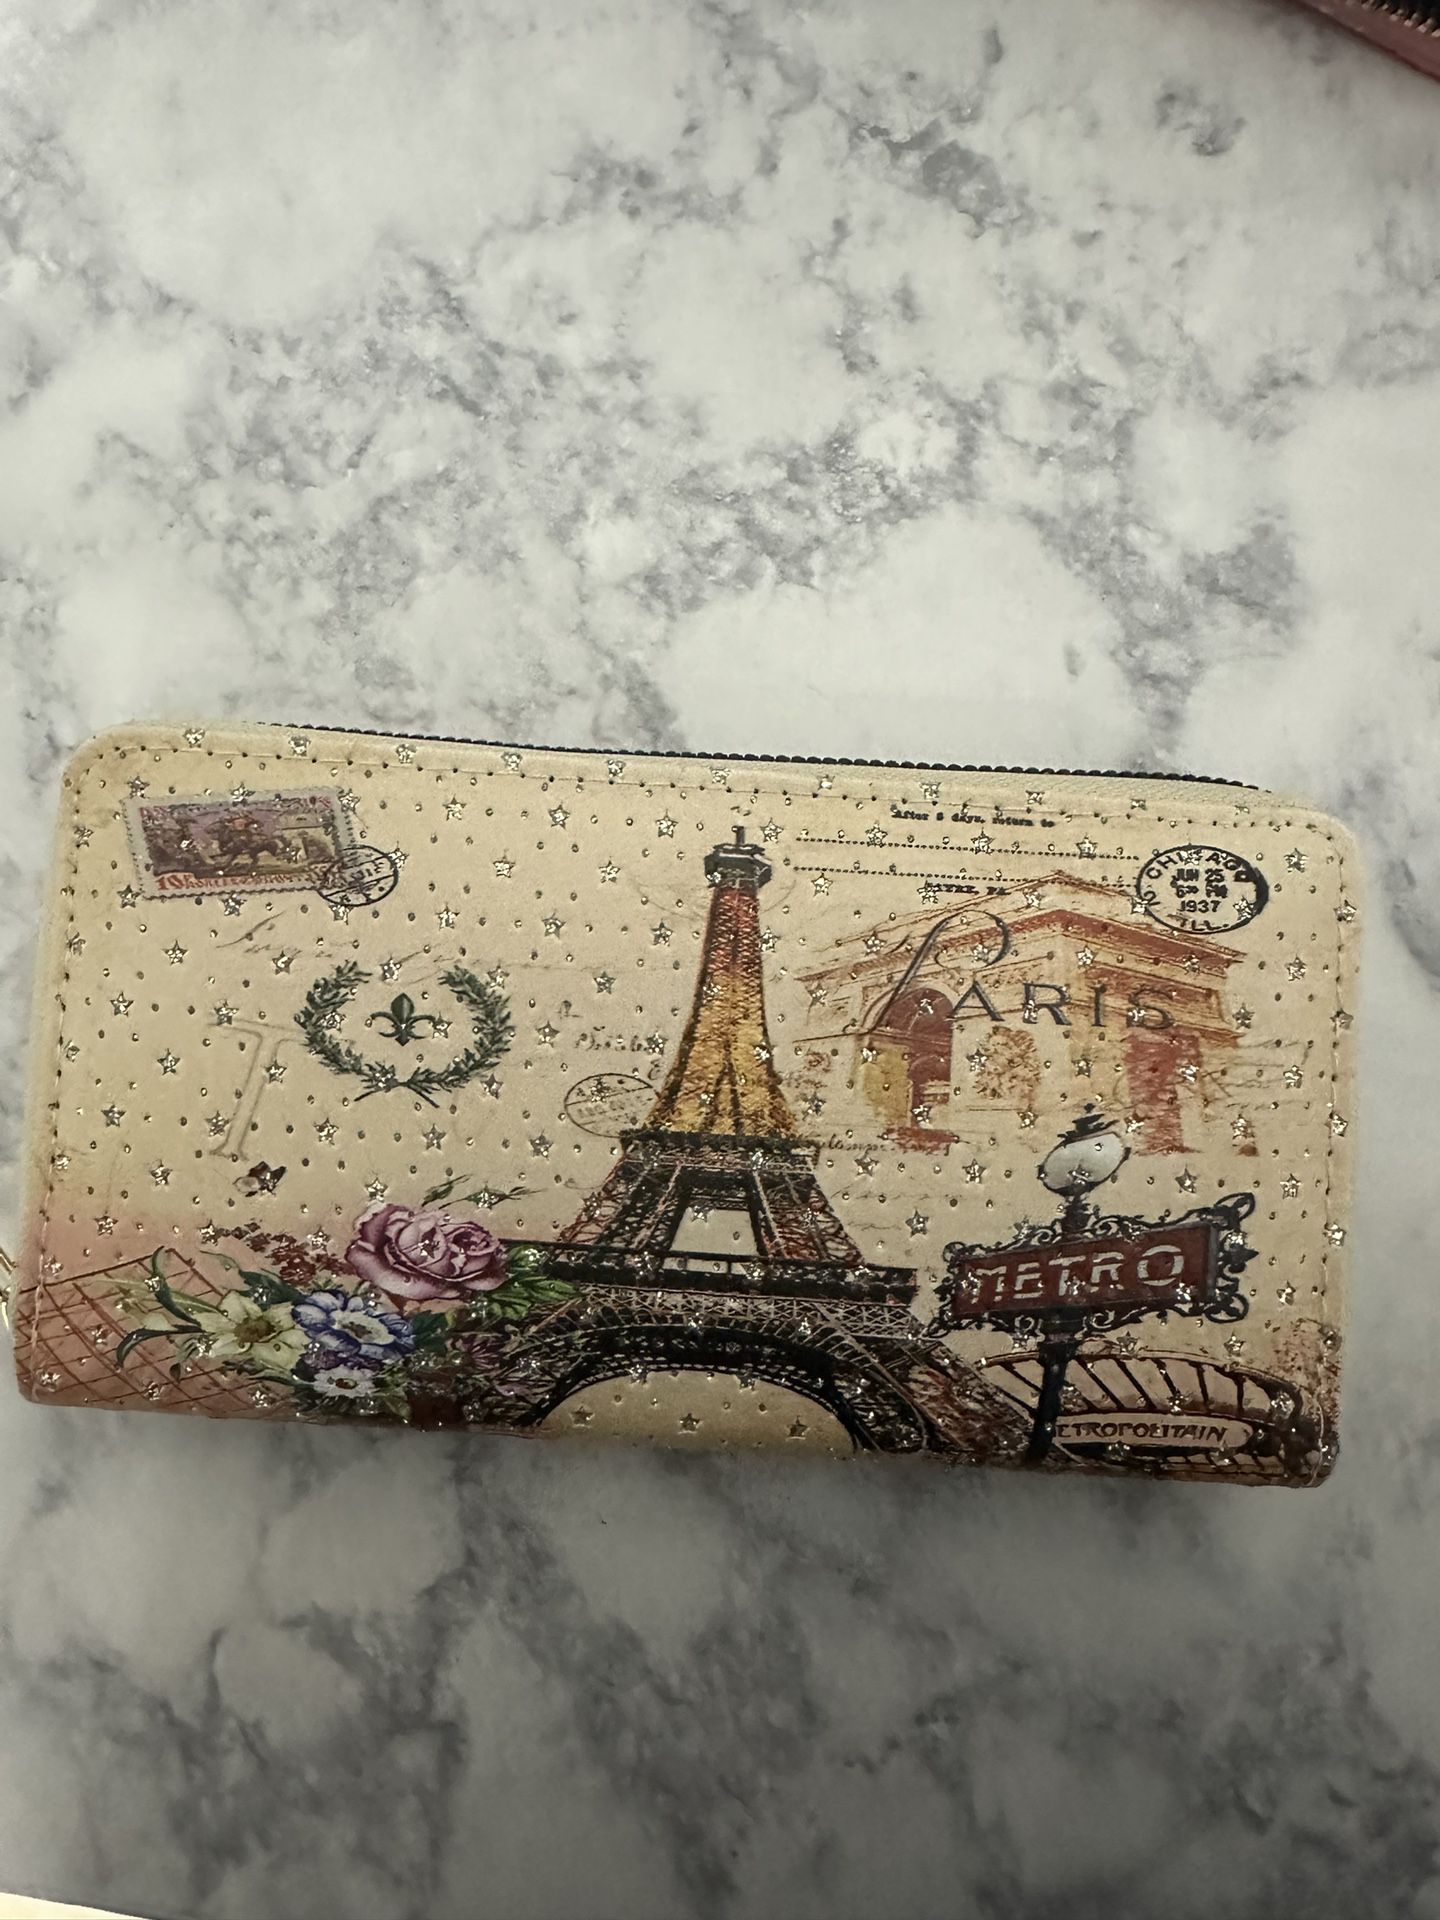 Paris, Woman Wallet